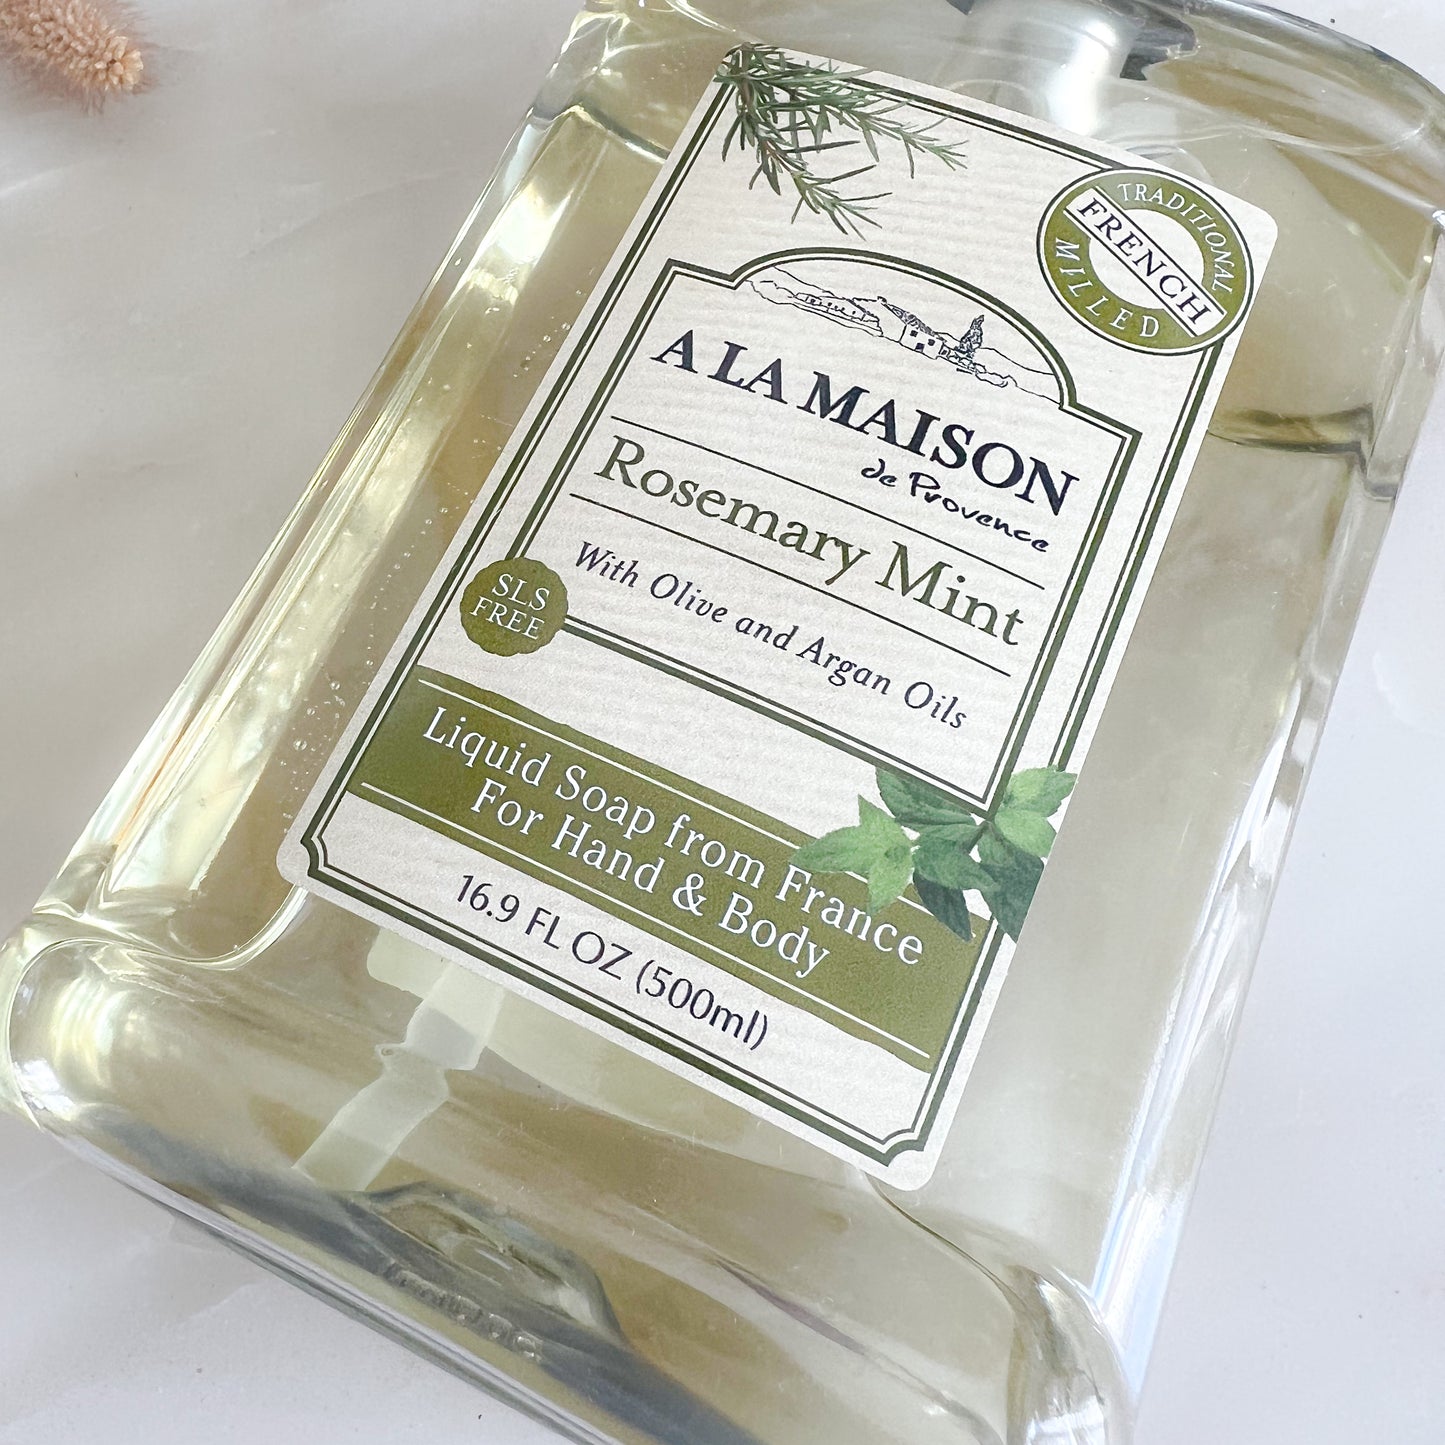 A La Maison de Provence Rosemary Mint Liquid Hand and Body Soap - BelleStyle